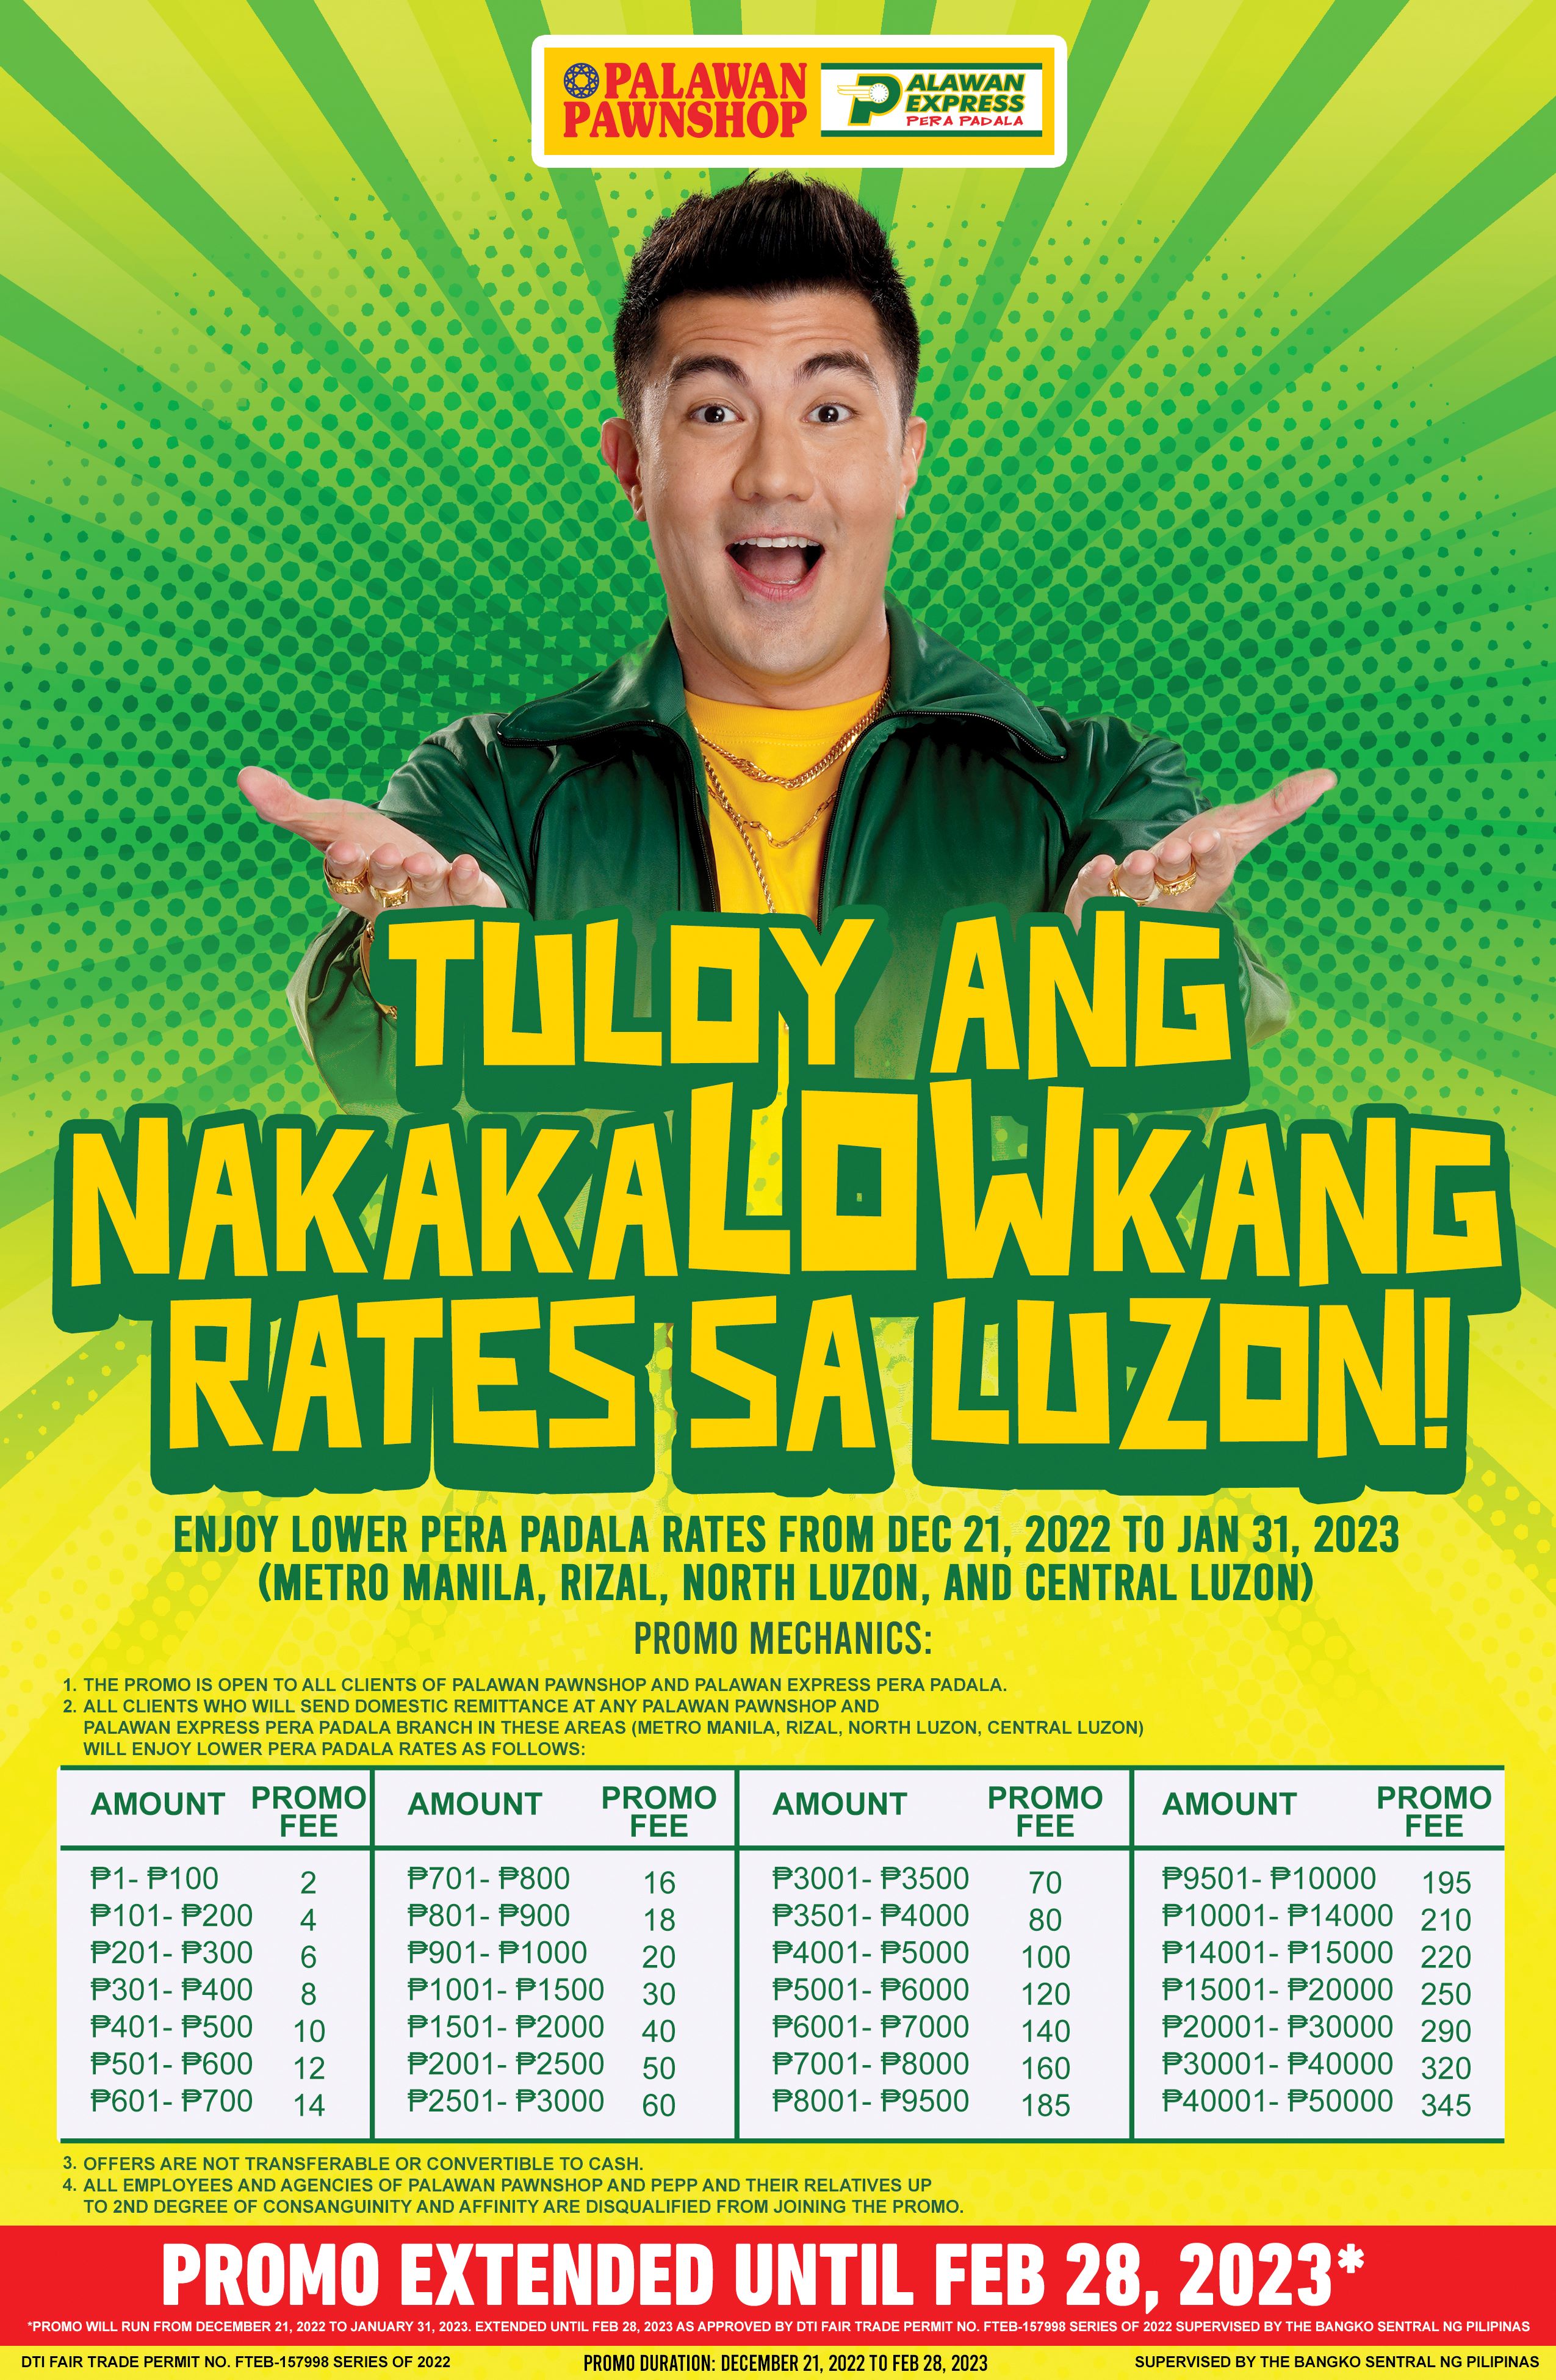 NakakaLOWkang-Rates-sa-Luzon-Promo-EXTENDED-until-Feb-28